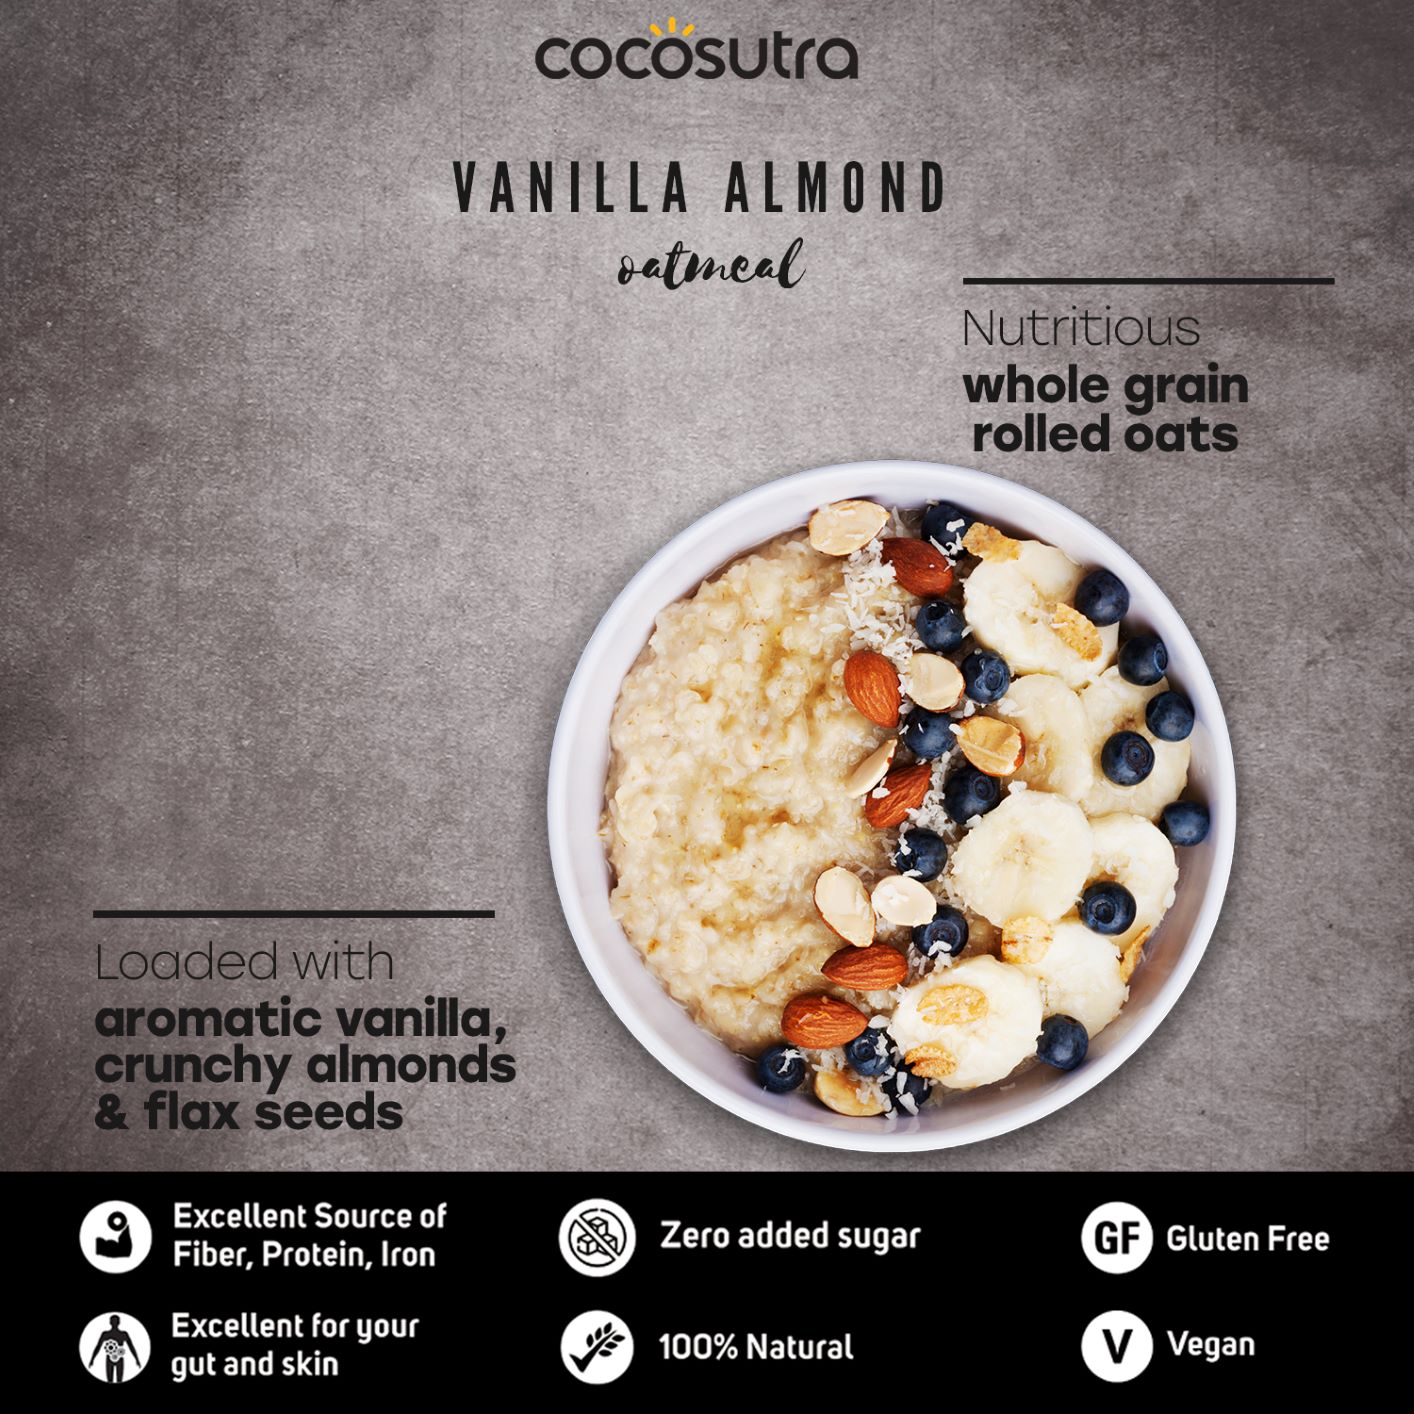 Vanilla Almond Oatmeal Benefits